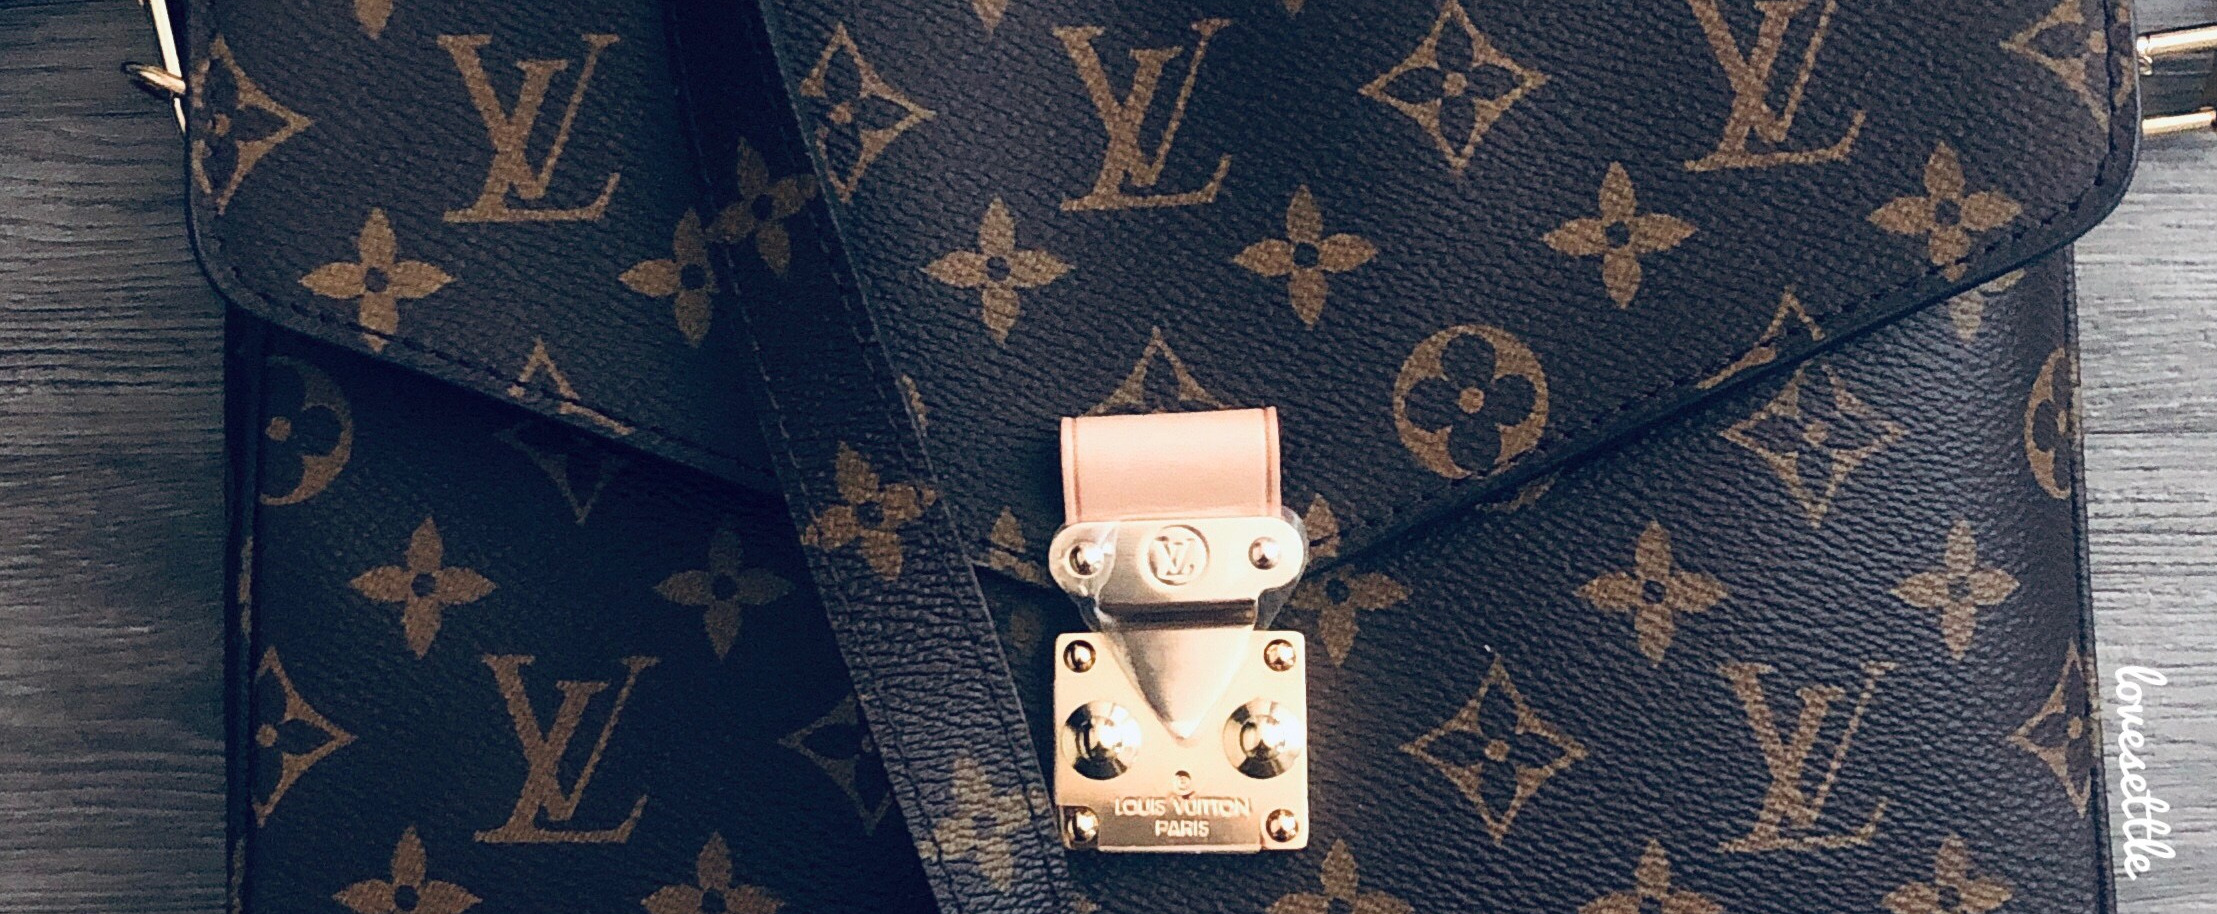 Top 3 Louis Vuitton Starter Pieces - Love Settle